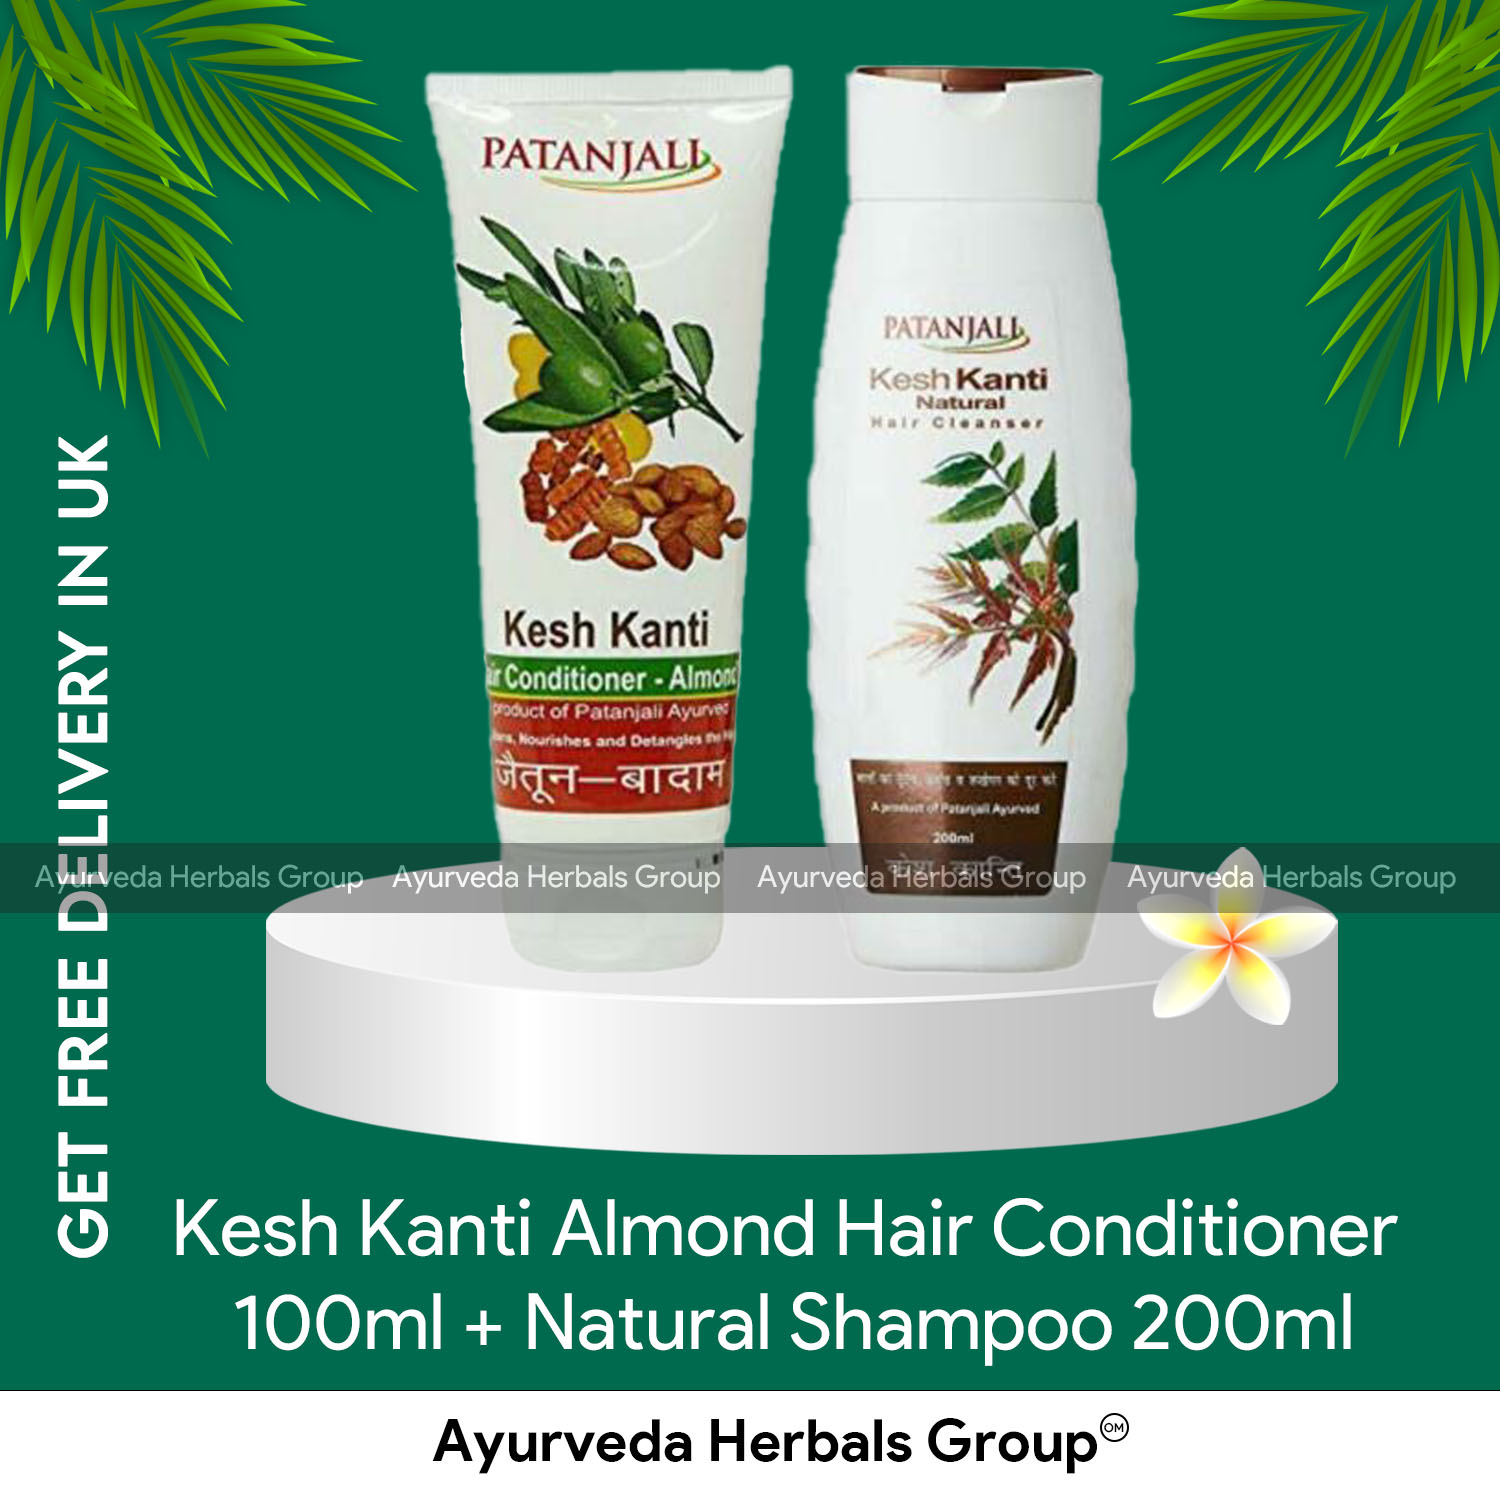 Patanjali Kesh Kanti Almond Hair Conditioner 100ml + Natural Shampoo 200ml |